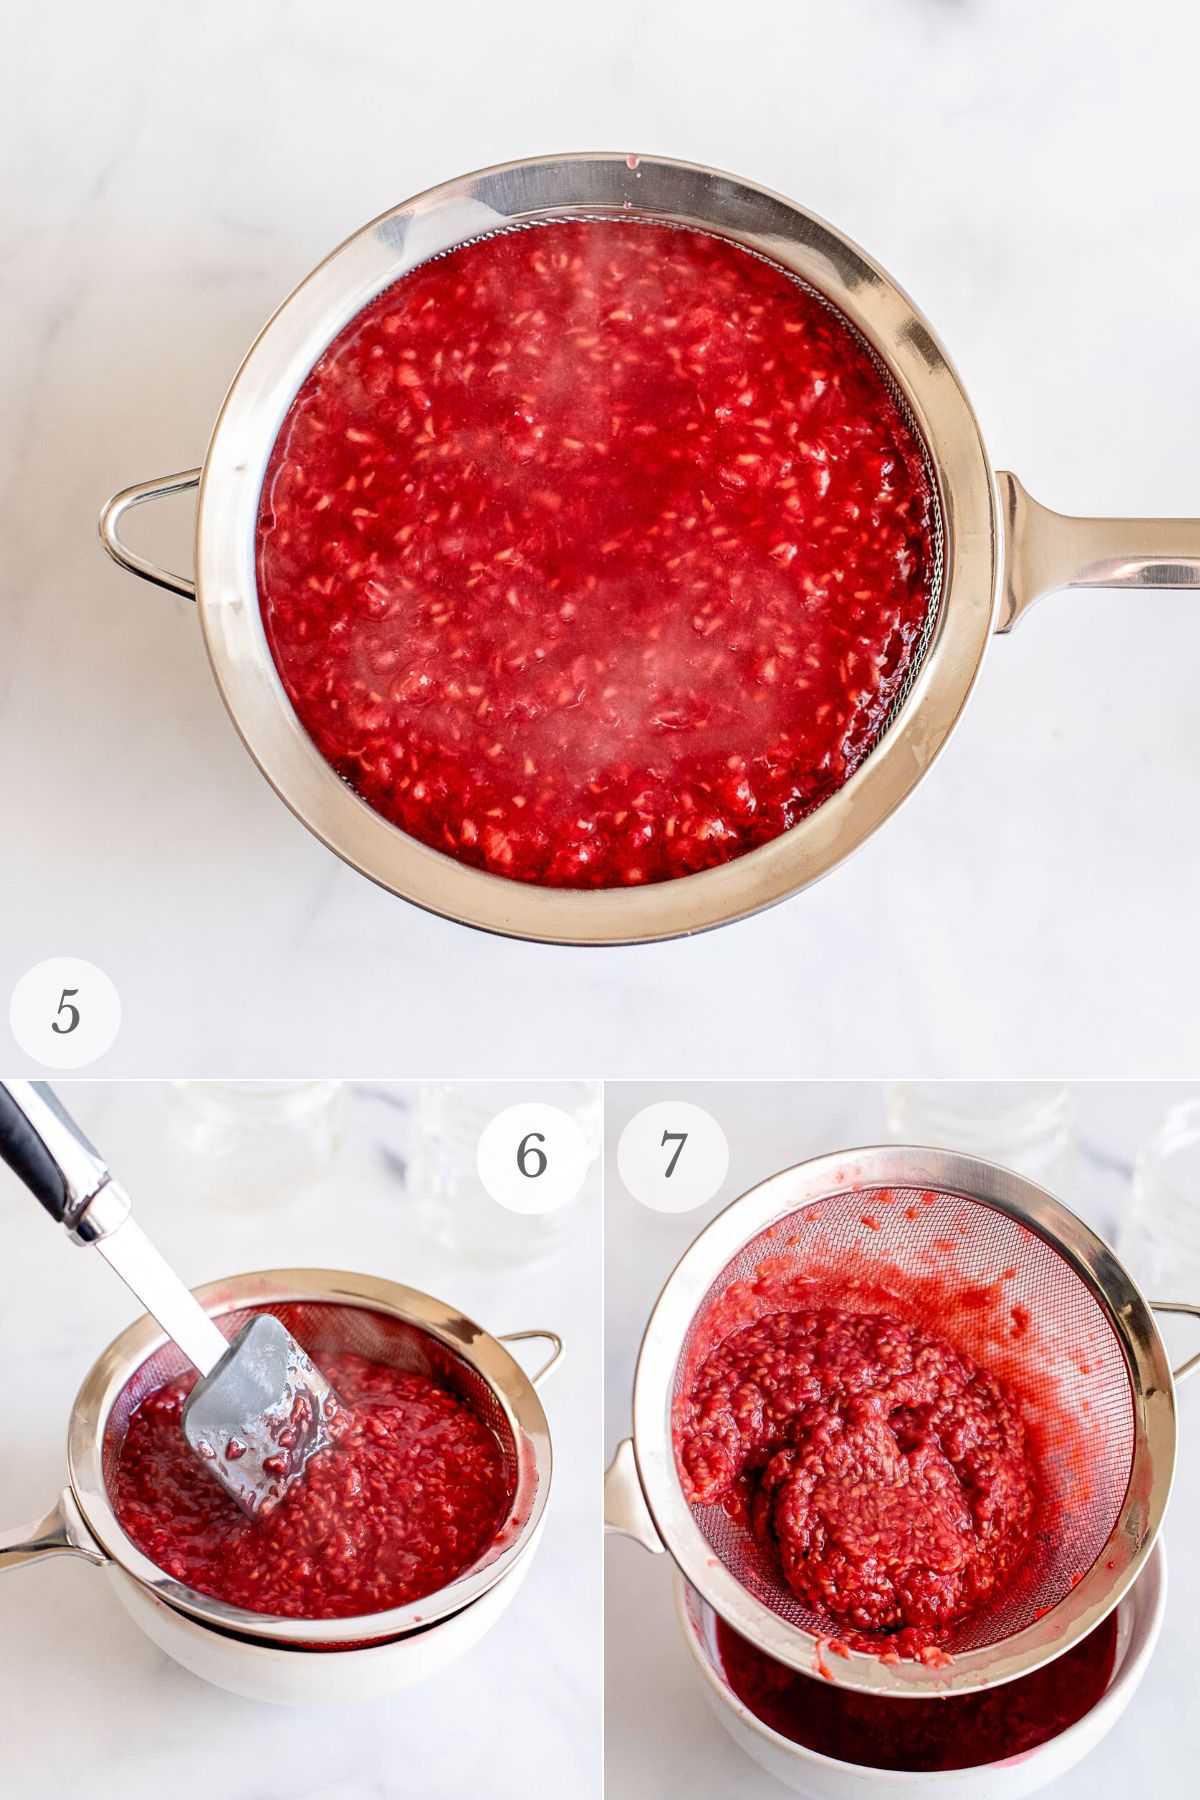 raspberry vinaigrette recipe steps 5-7.